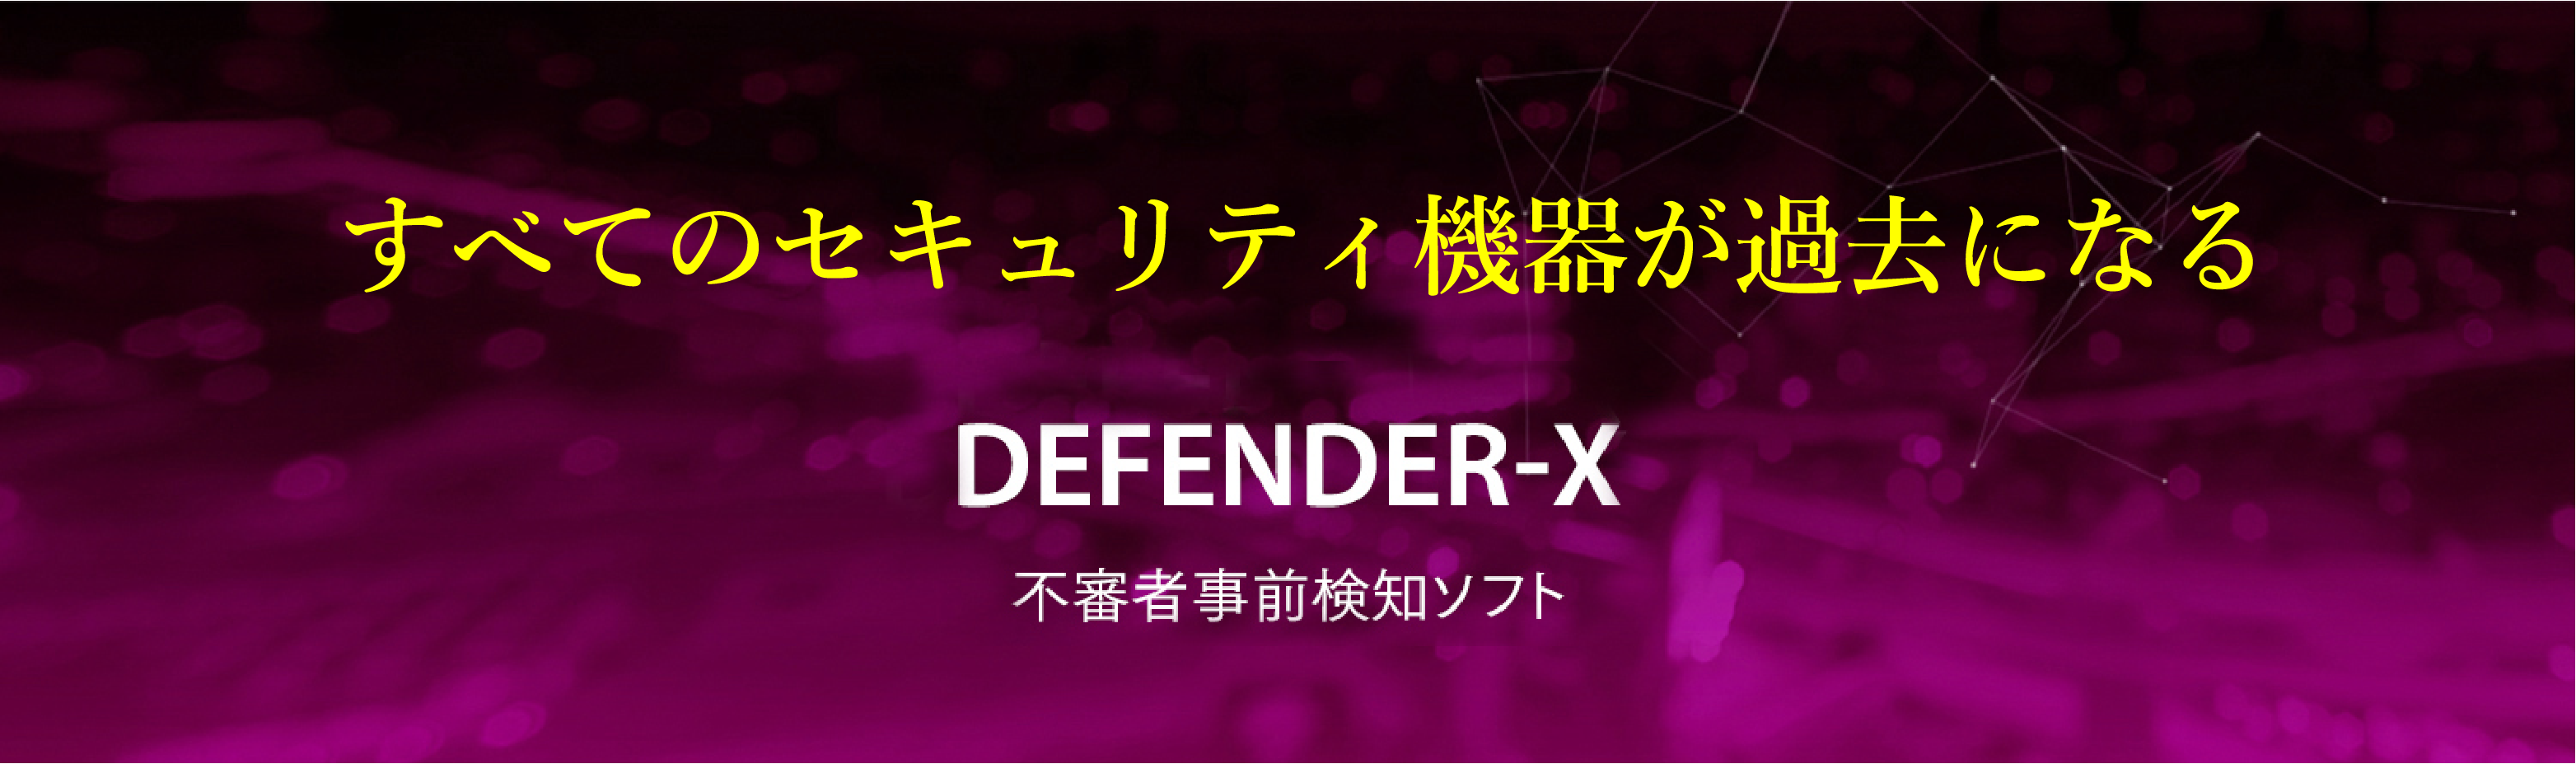 DEFENDER-X